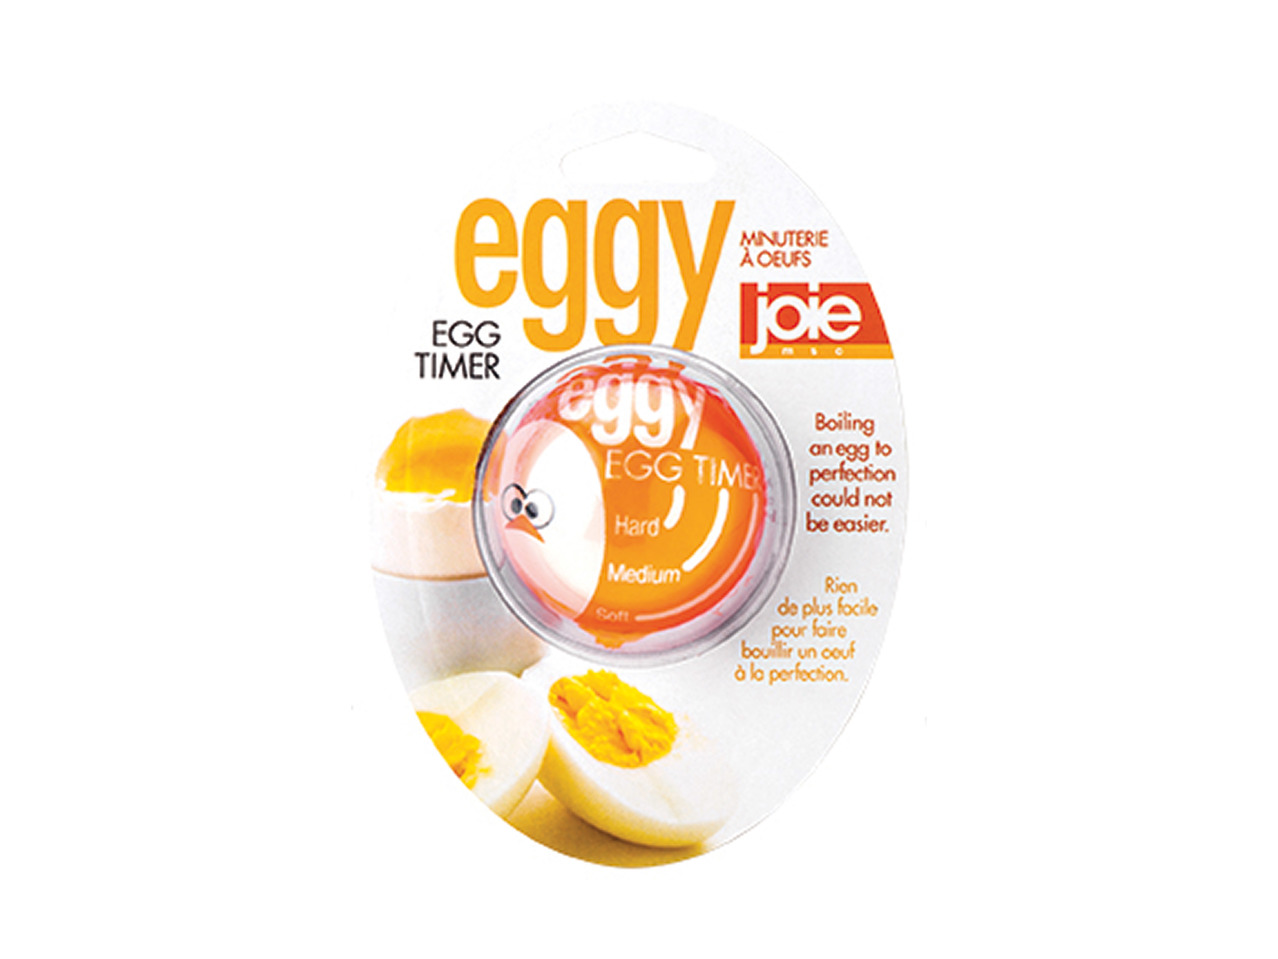 Joie Egg Accessories1